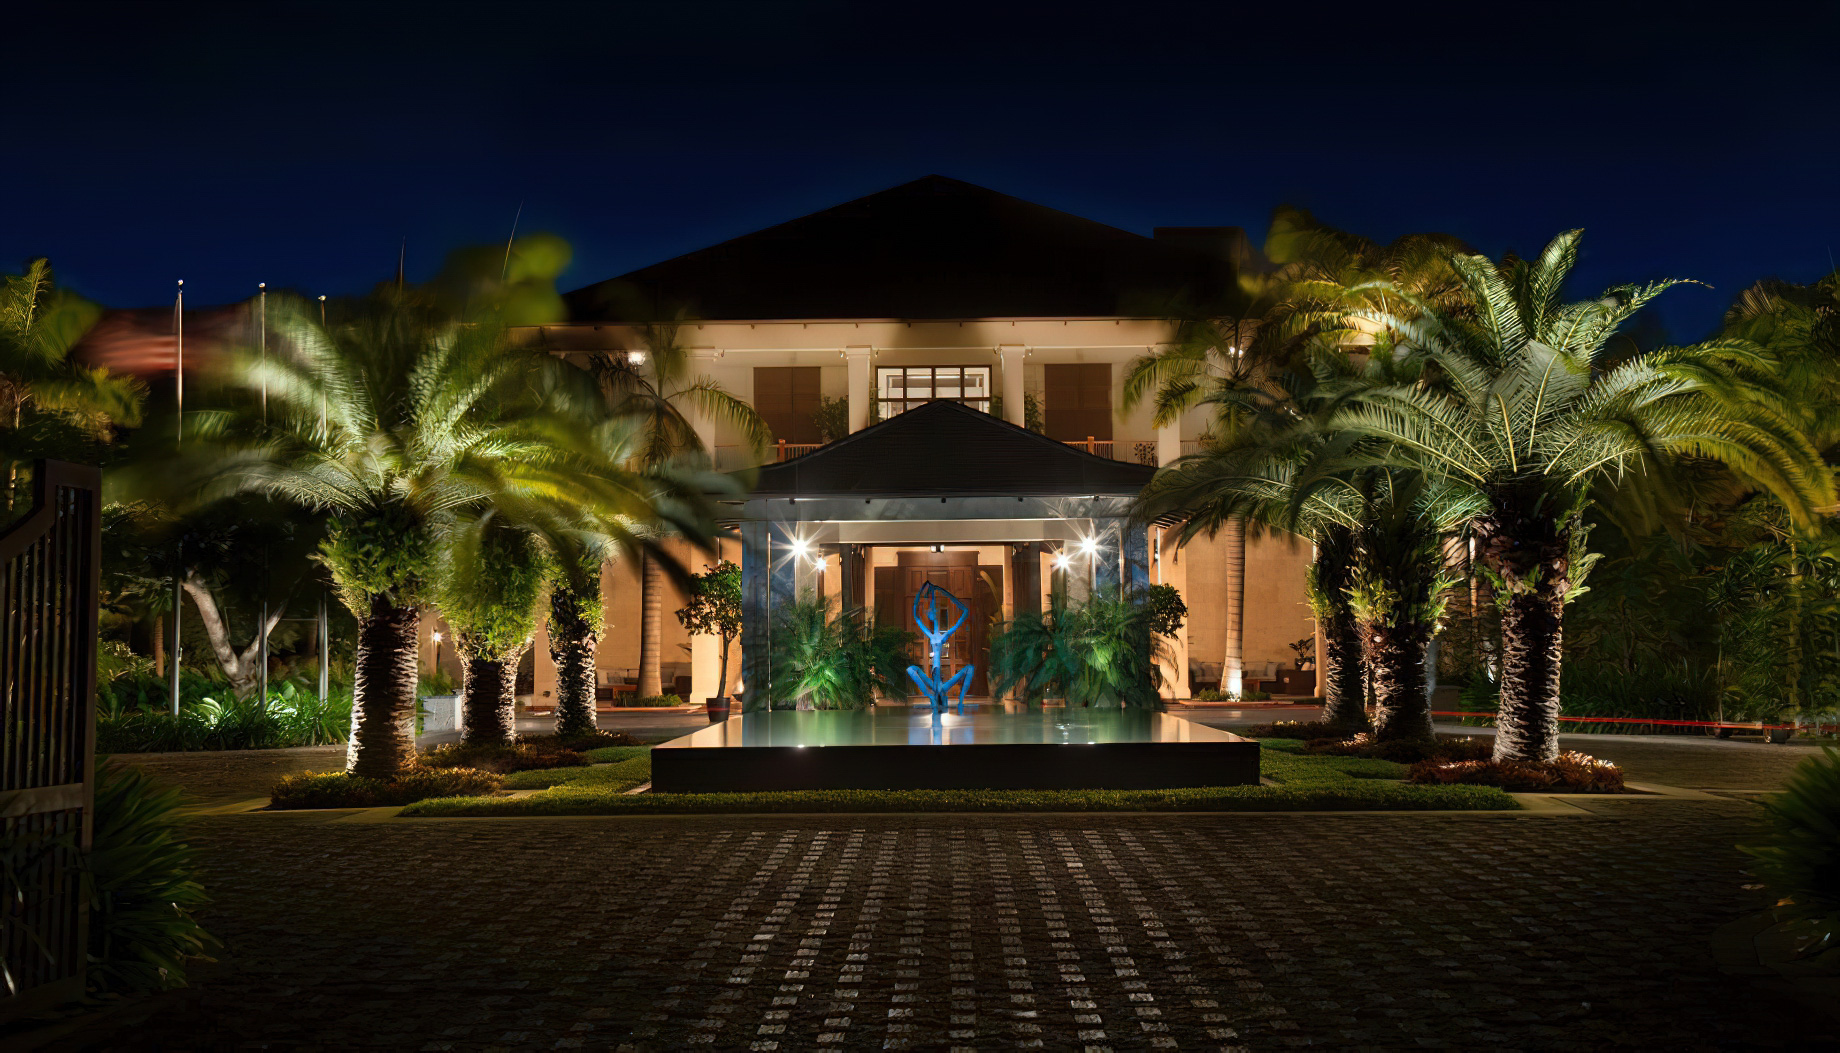 The St. Regis Bahia Beach Resort – Rio Grande, Puerto Rico – Resort at Night